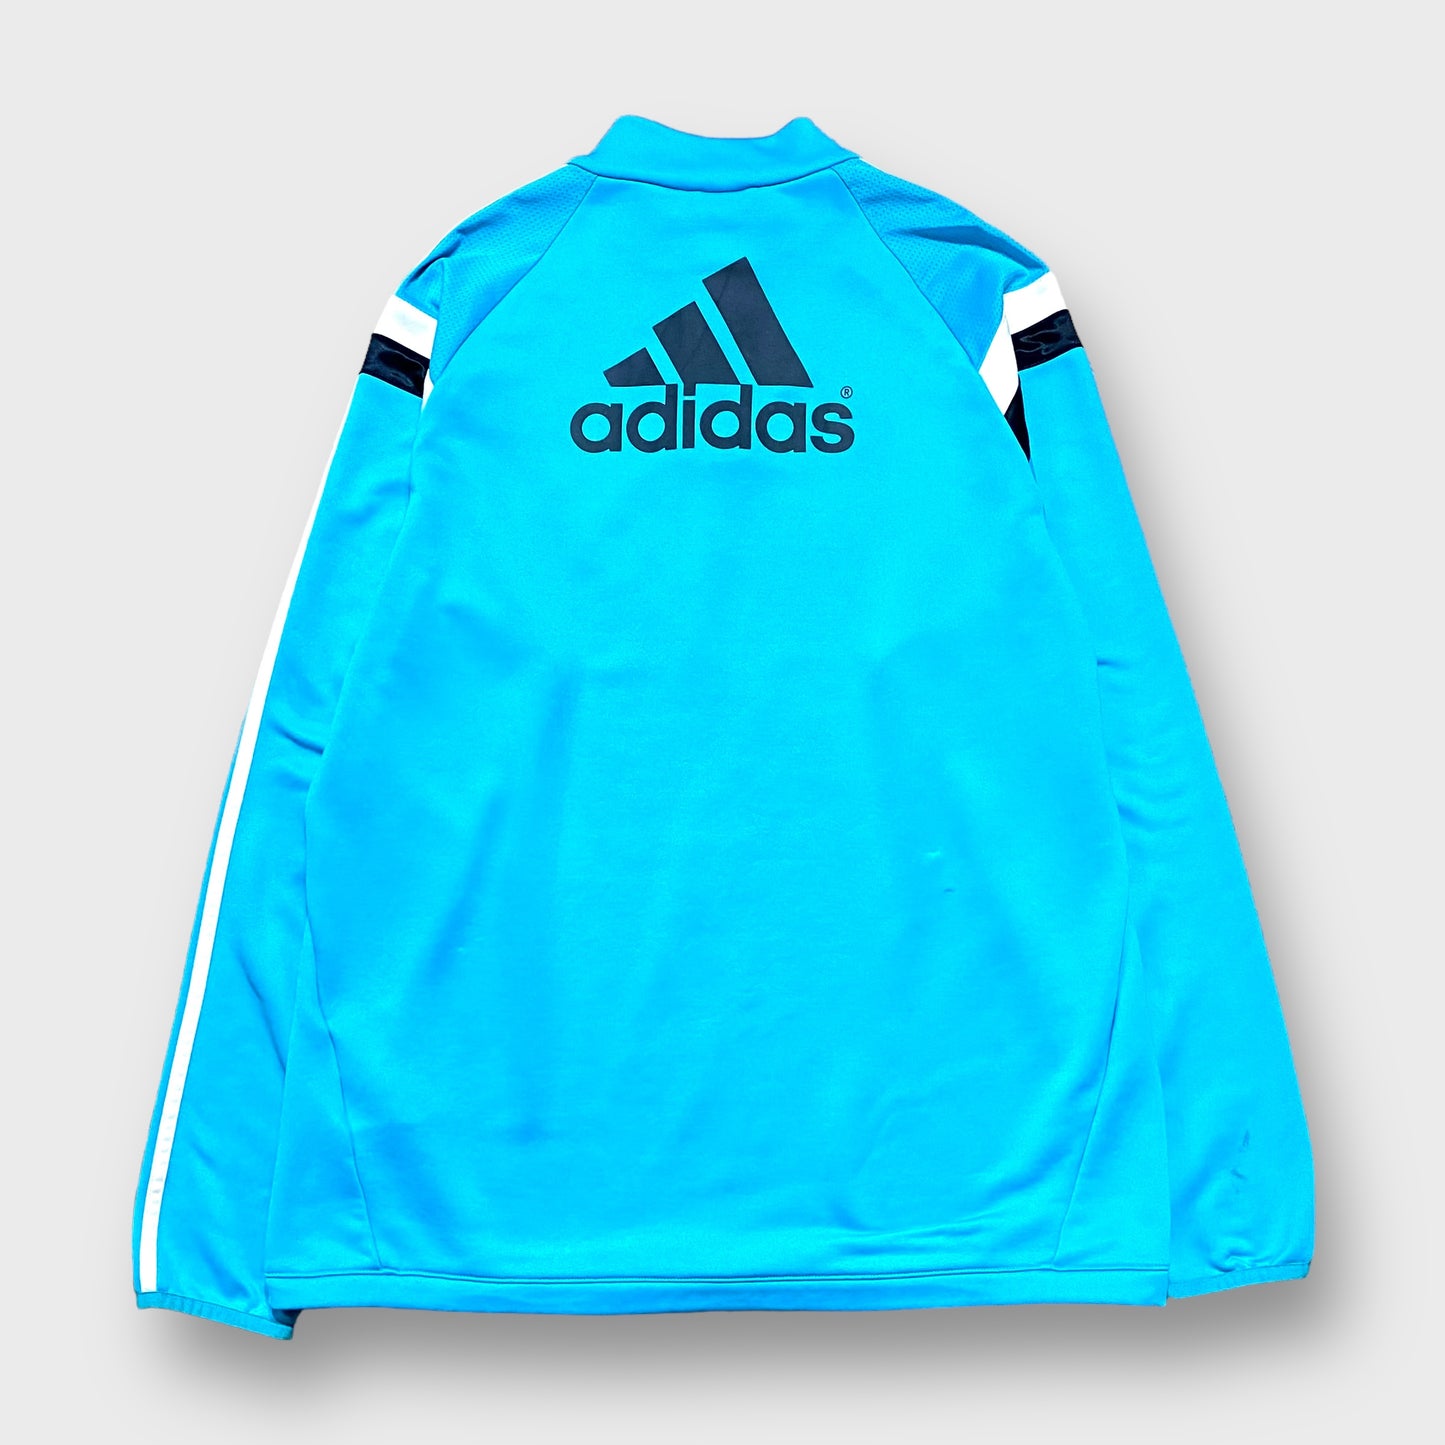 00's "adidas" CHERSEA team half zip pullover team track jacket